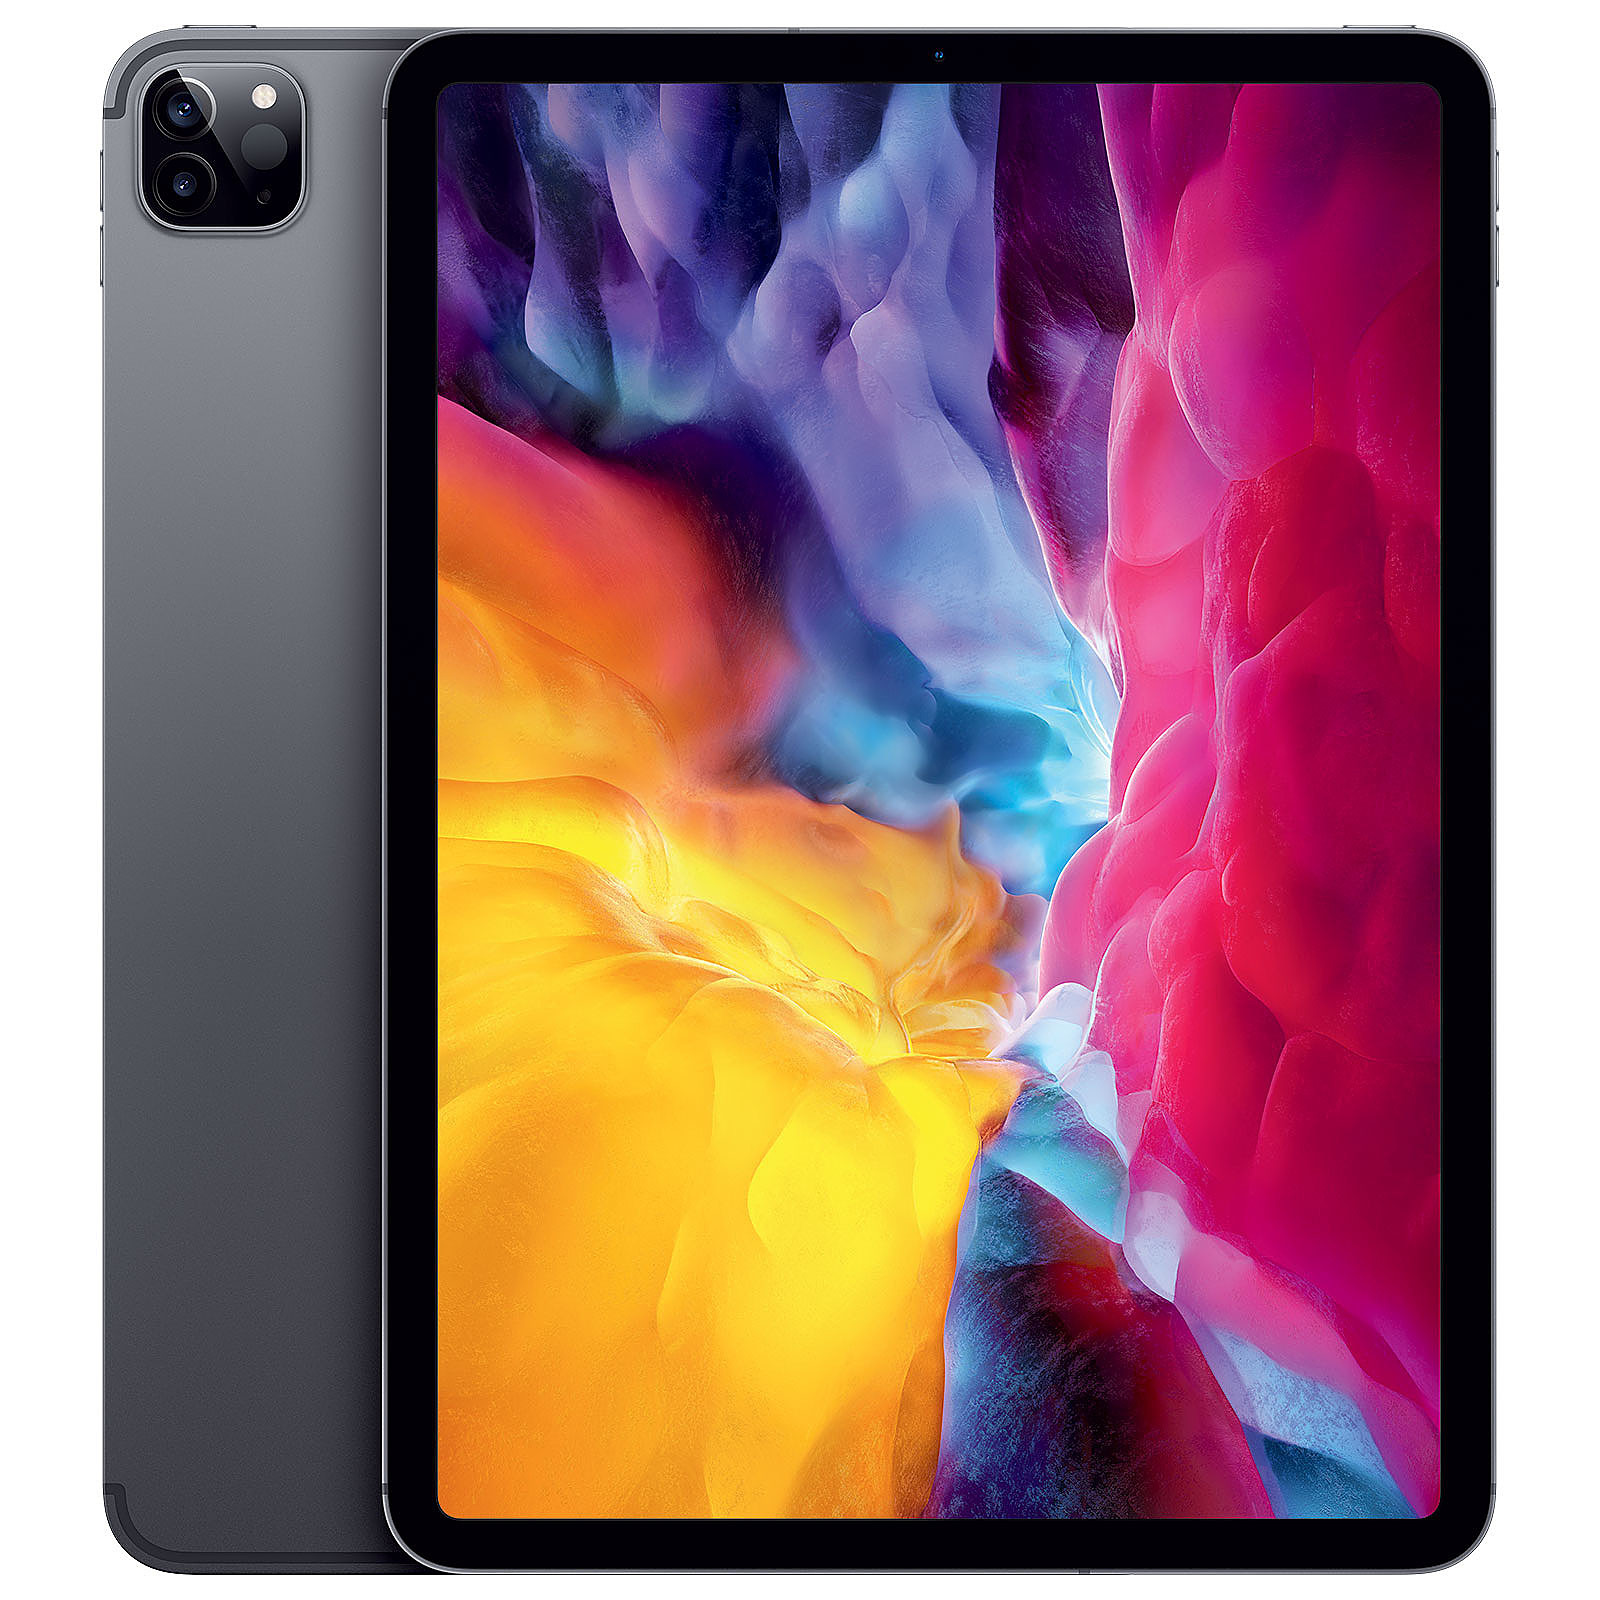 Apple iPad Pro (2020) 11 pouces 256 Go Wi-Fi + Cellular Gris Sideral · Reconditionne - Tablette tactile Apple